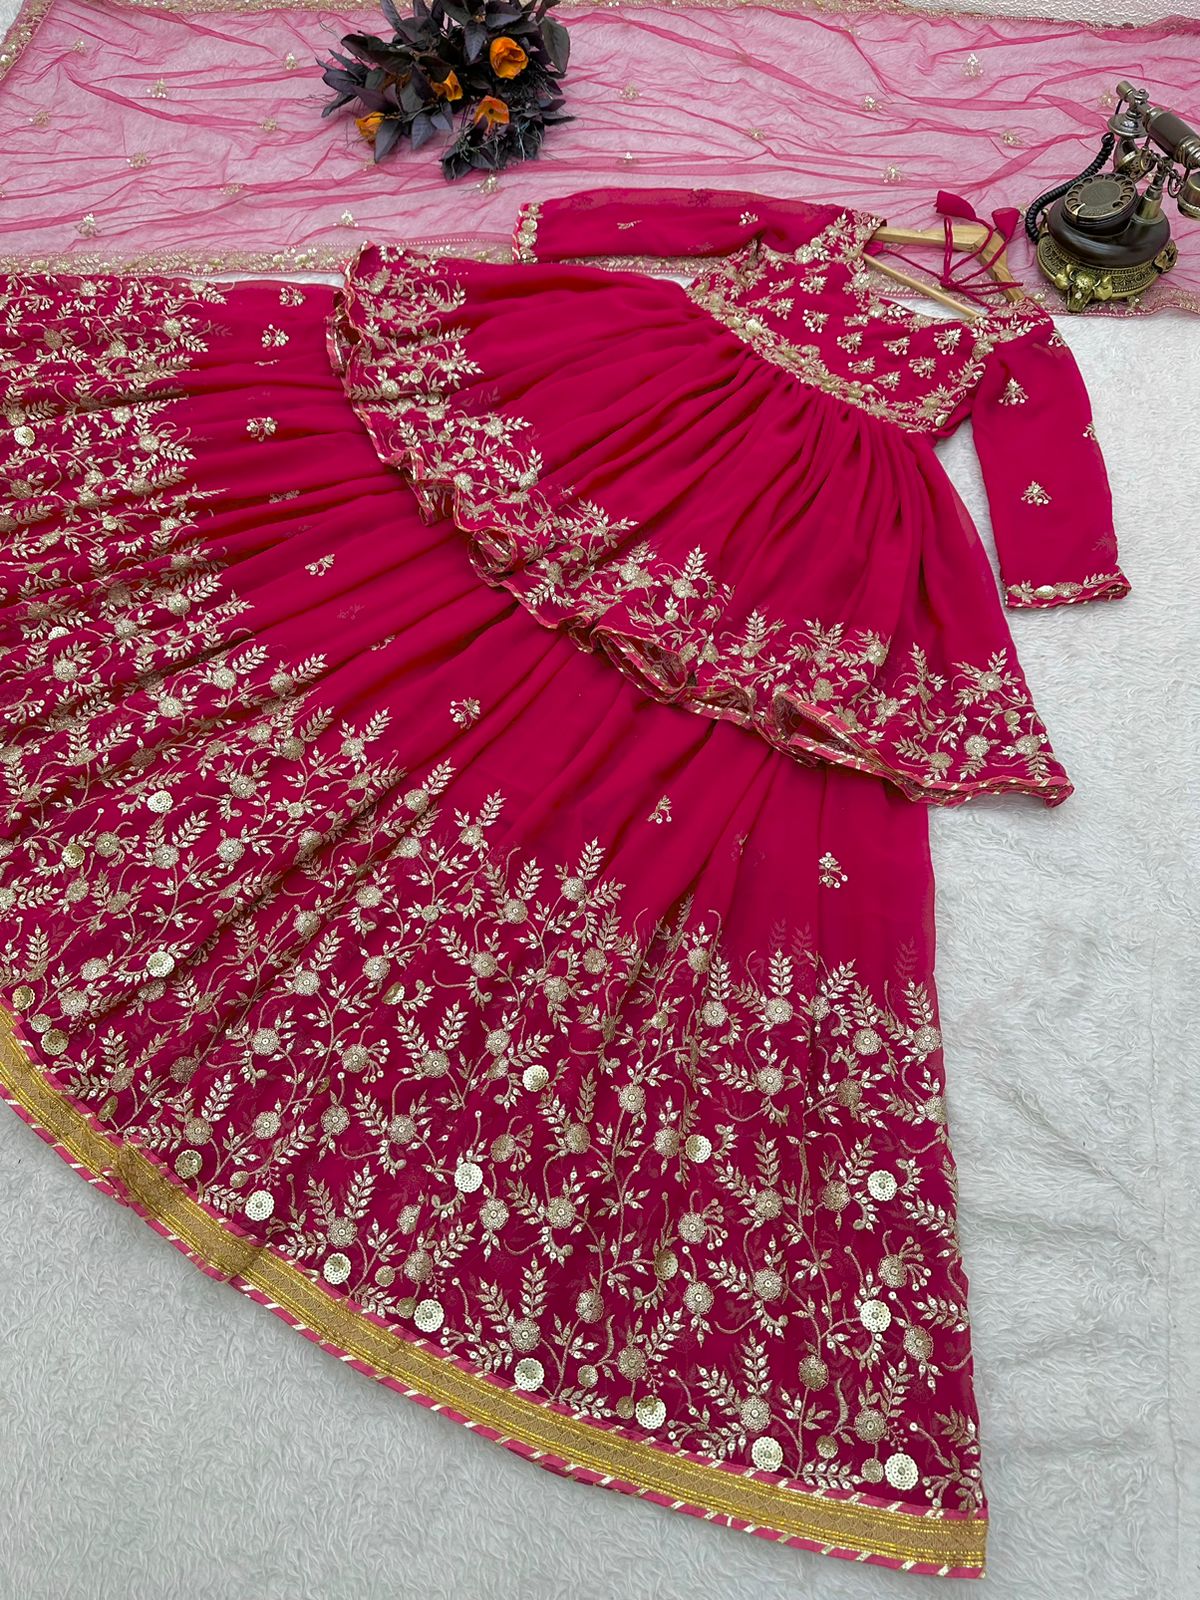 Ravishing Embroidery Work Pink Color Lehenga With Top